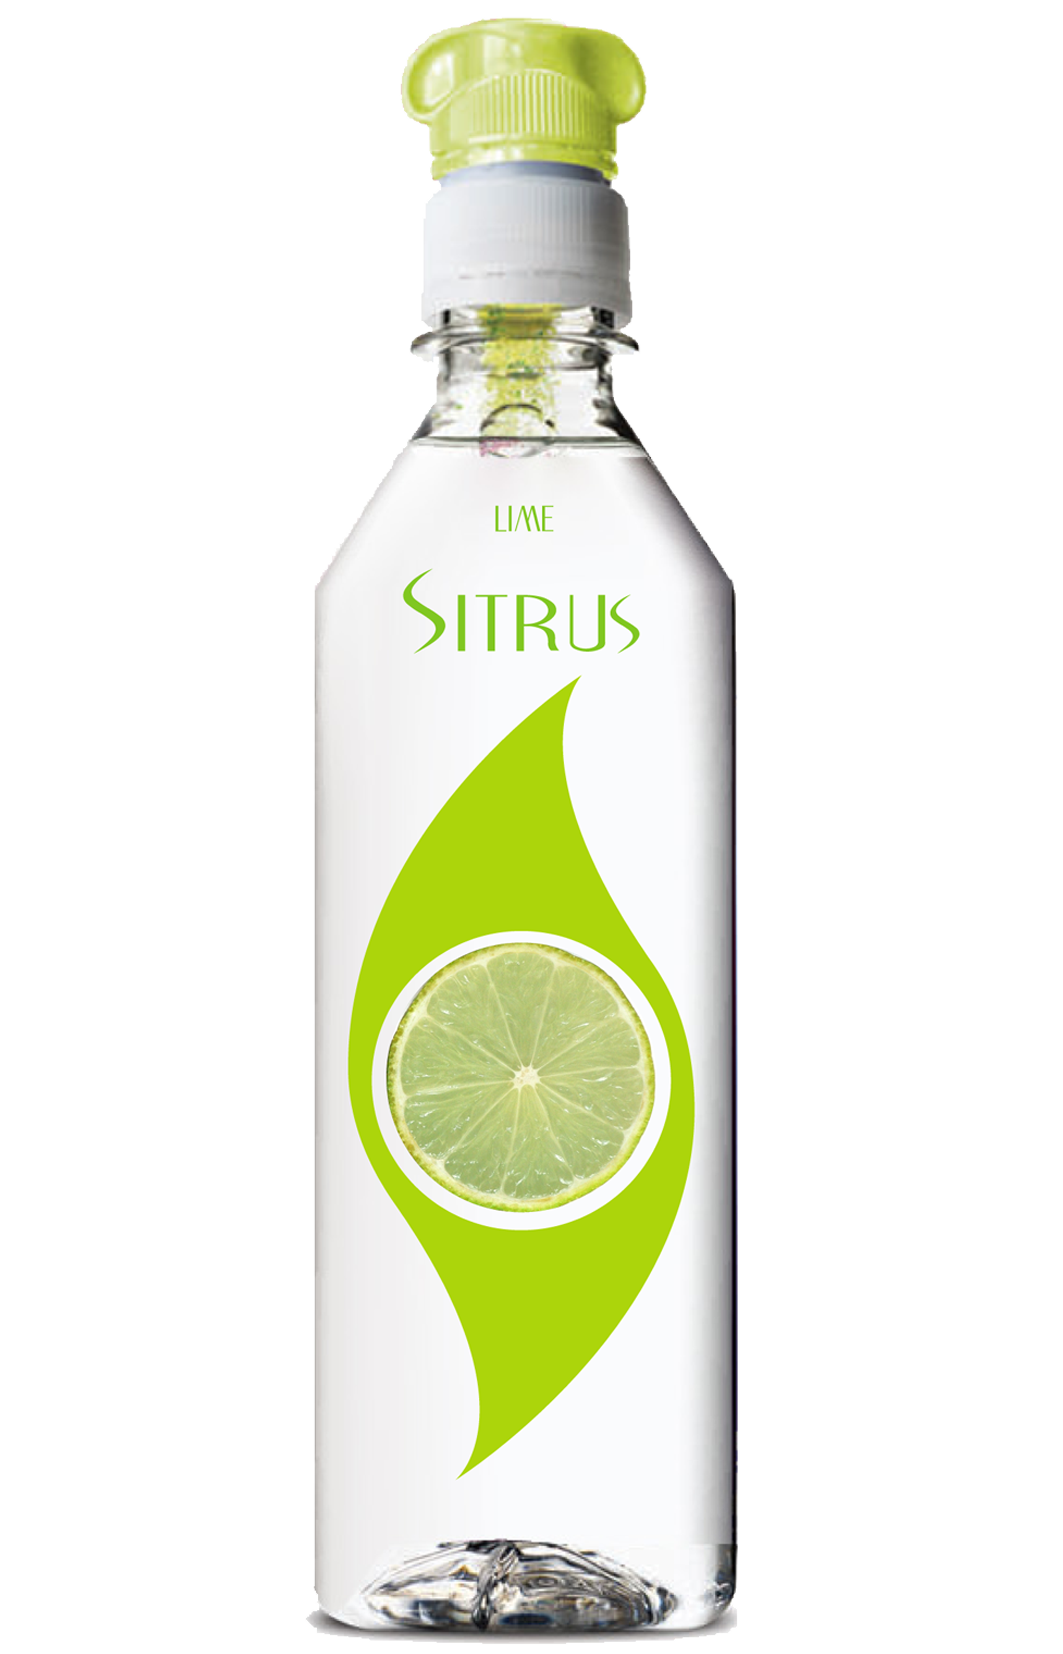 Sitrus  citrus  water  csulb  branding identity